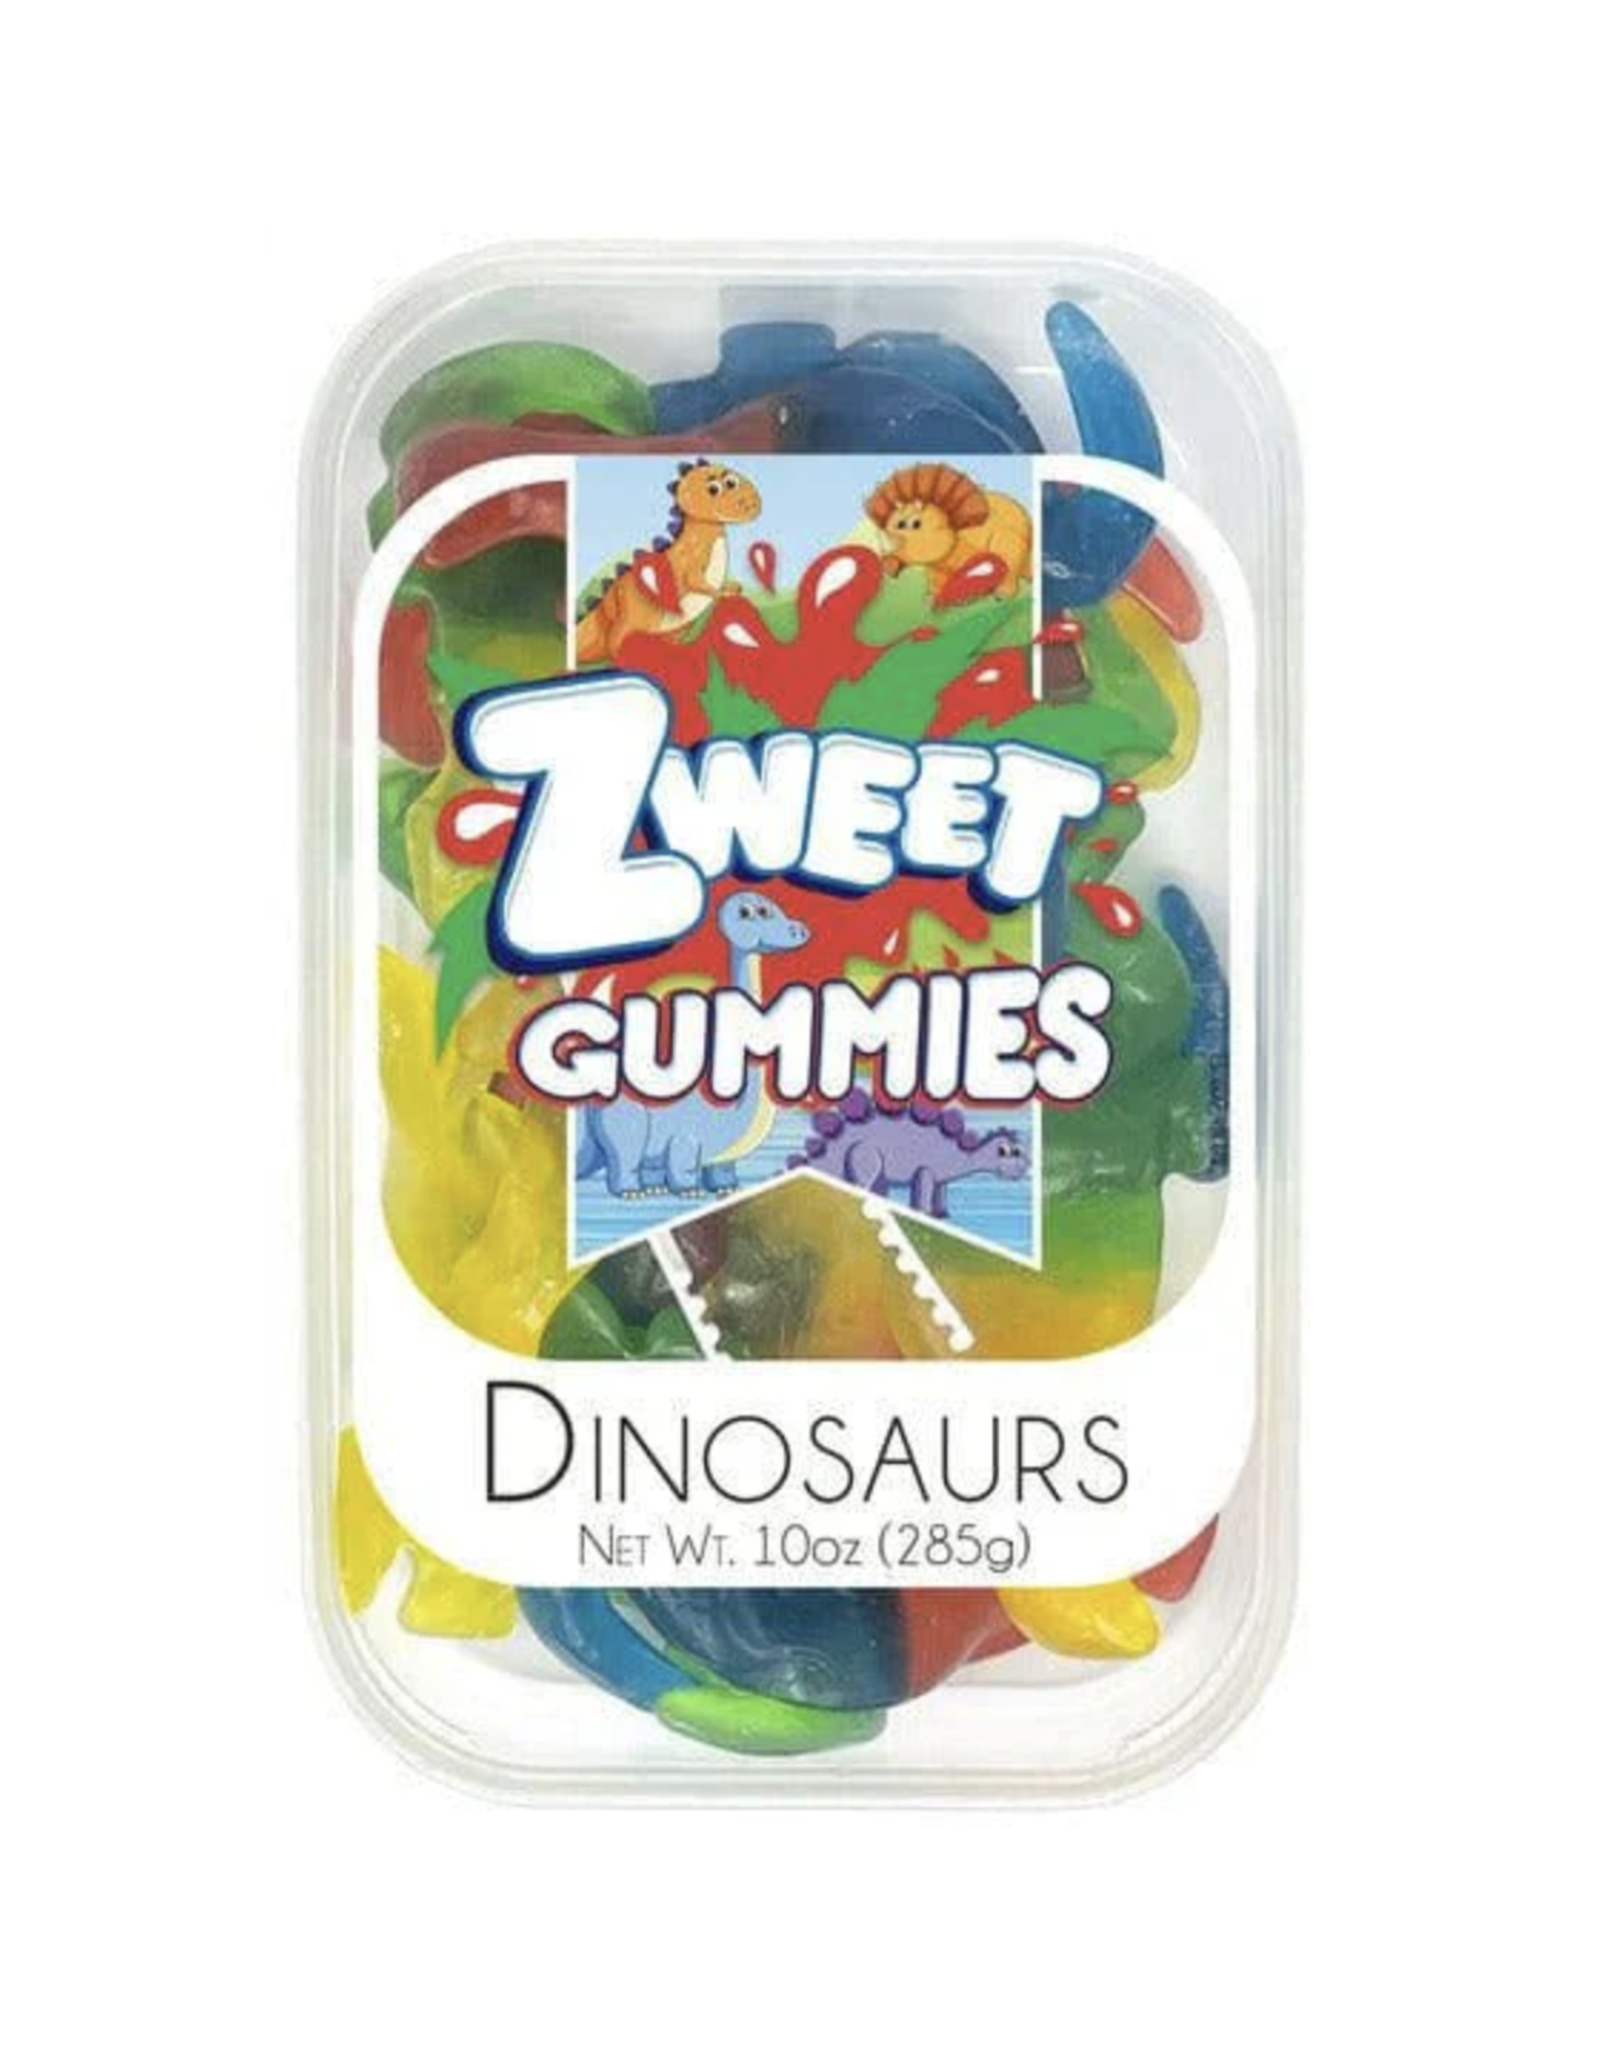 Zweet Gummies Dinosaurs Tray (Halal & Kosher Certified)